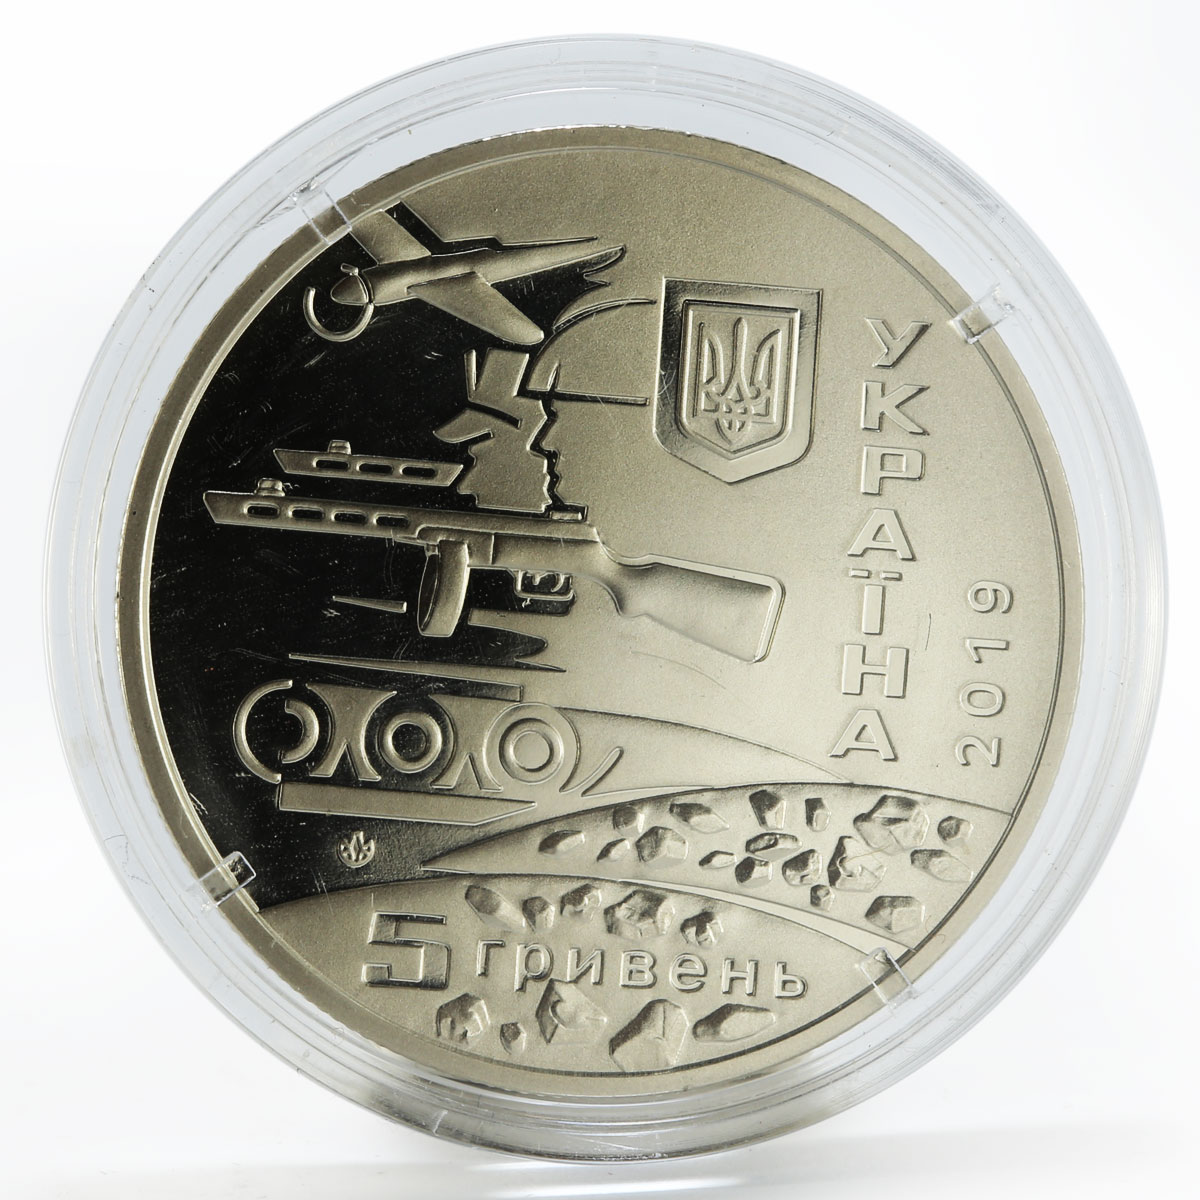 Ukraine 5 hryven 75th Anniversary of Liberation in World War II nickel coin 2019